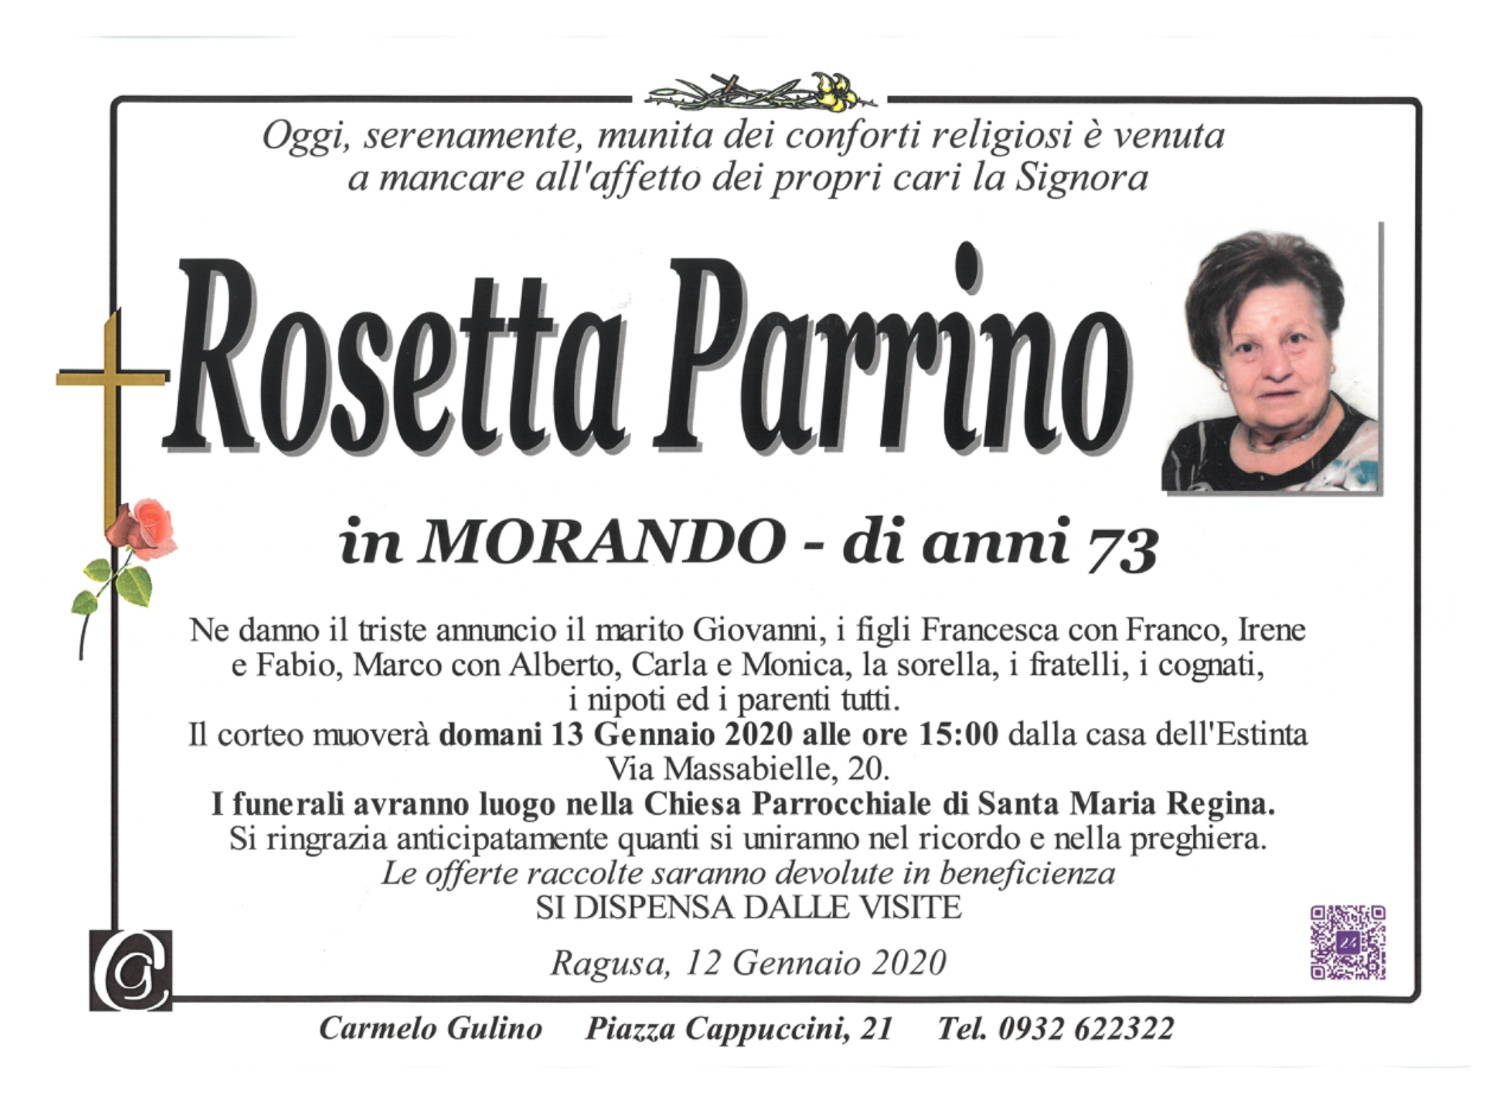 Rosetta Parrino